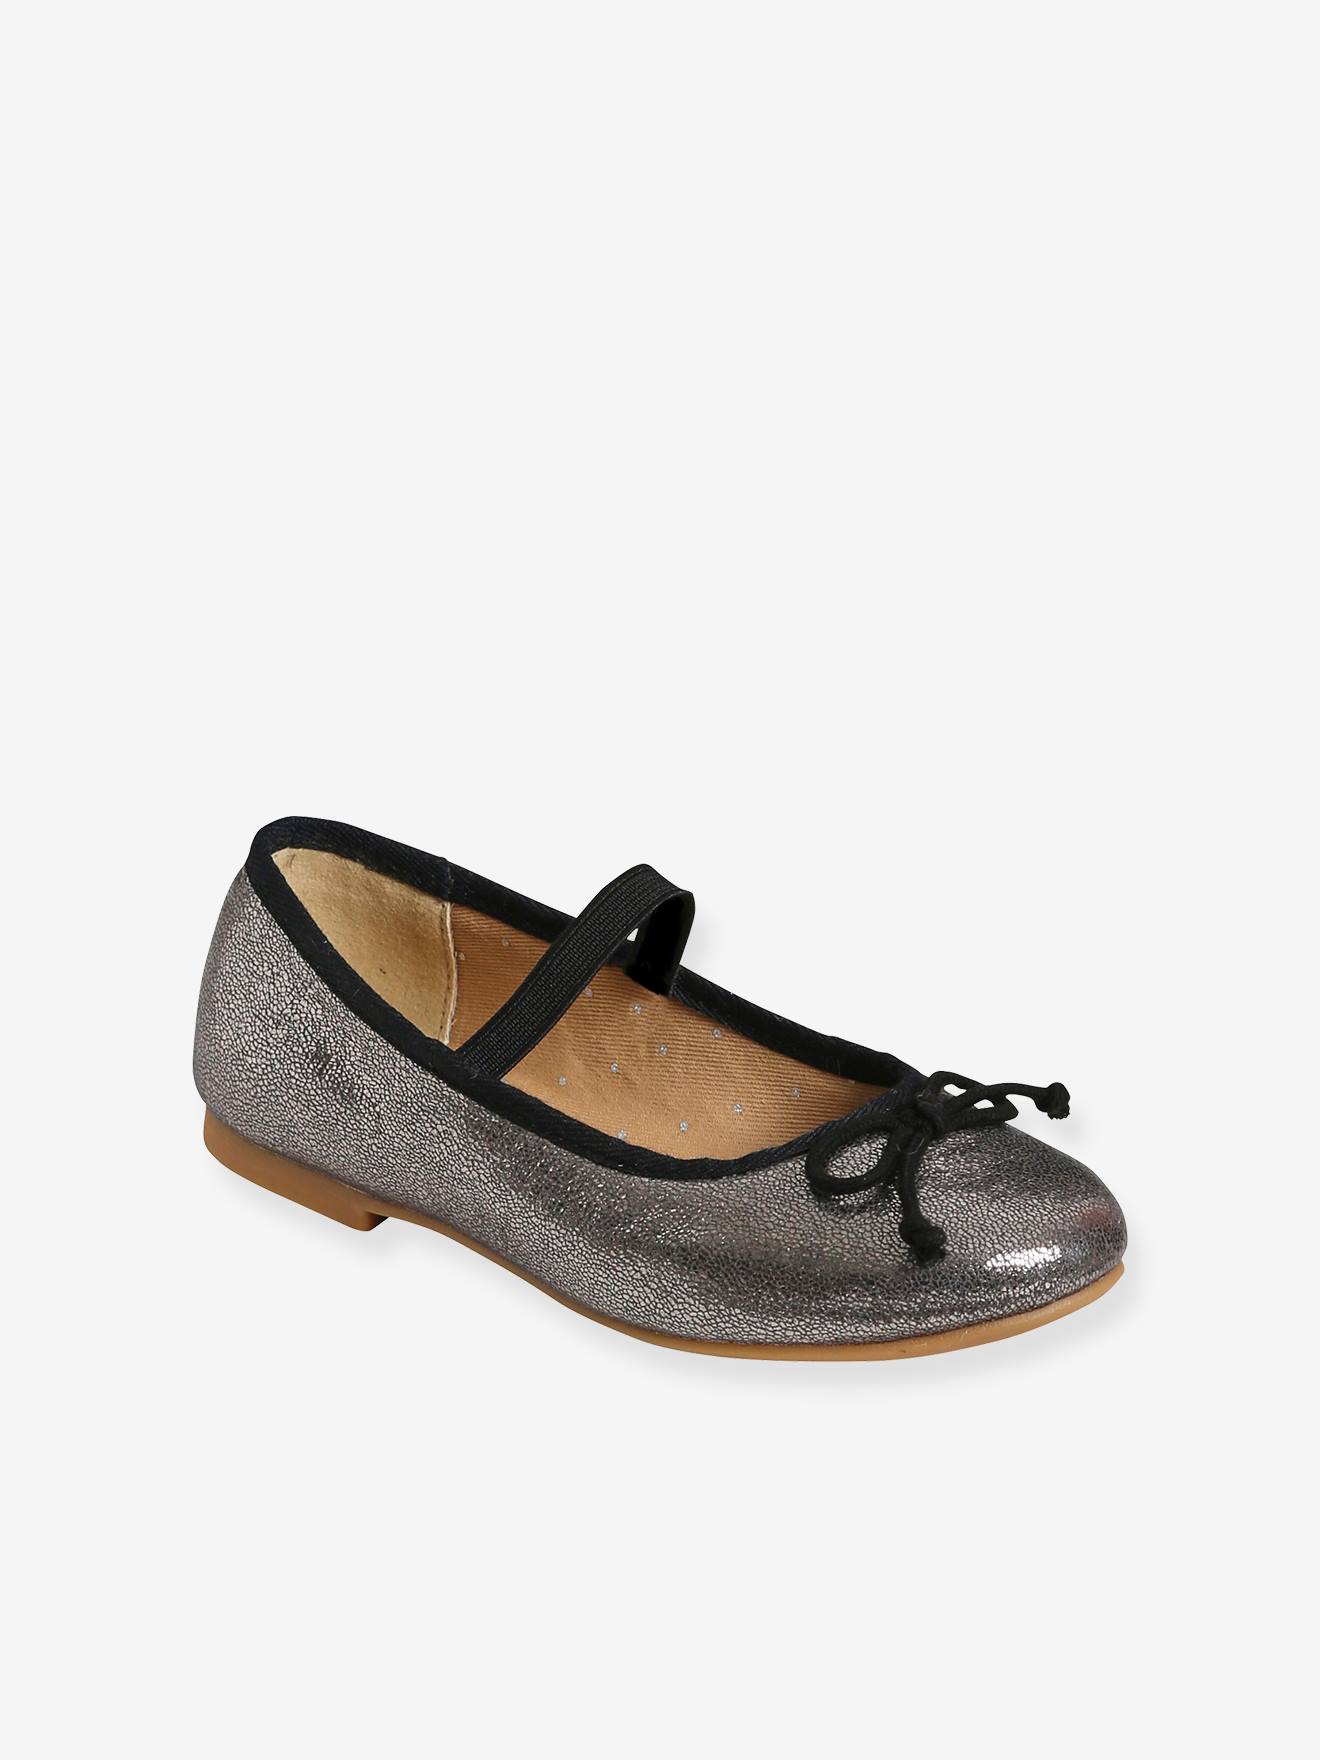 Iridescent Mary Jane Shoes for Girls grey dark metallized